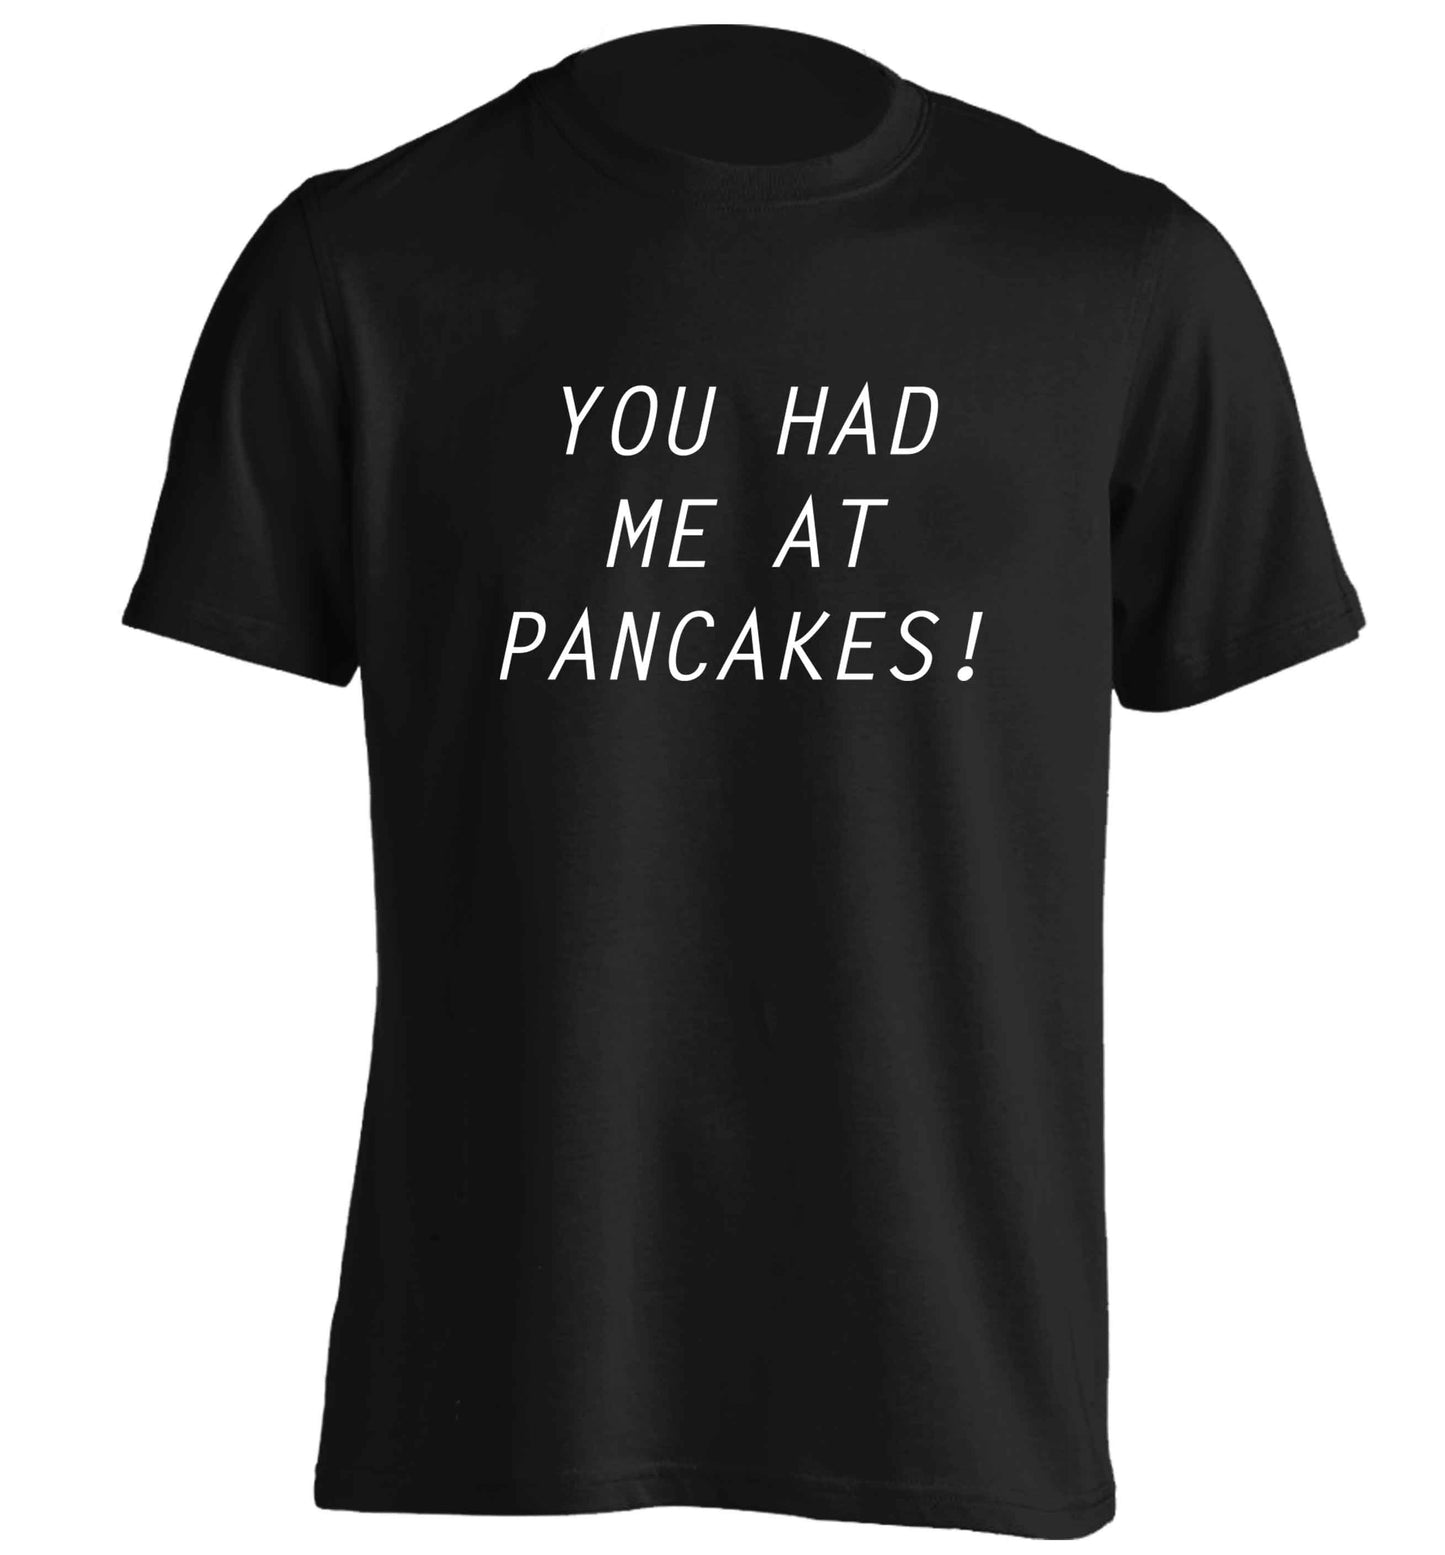 You had me at pancakes adults unisex black Tshirt 2XL